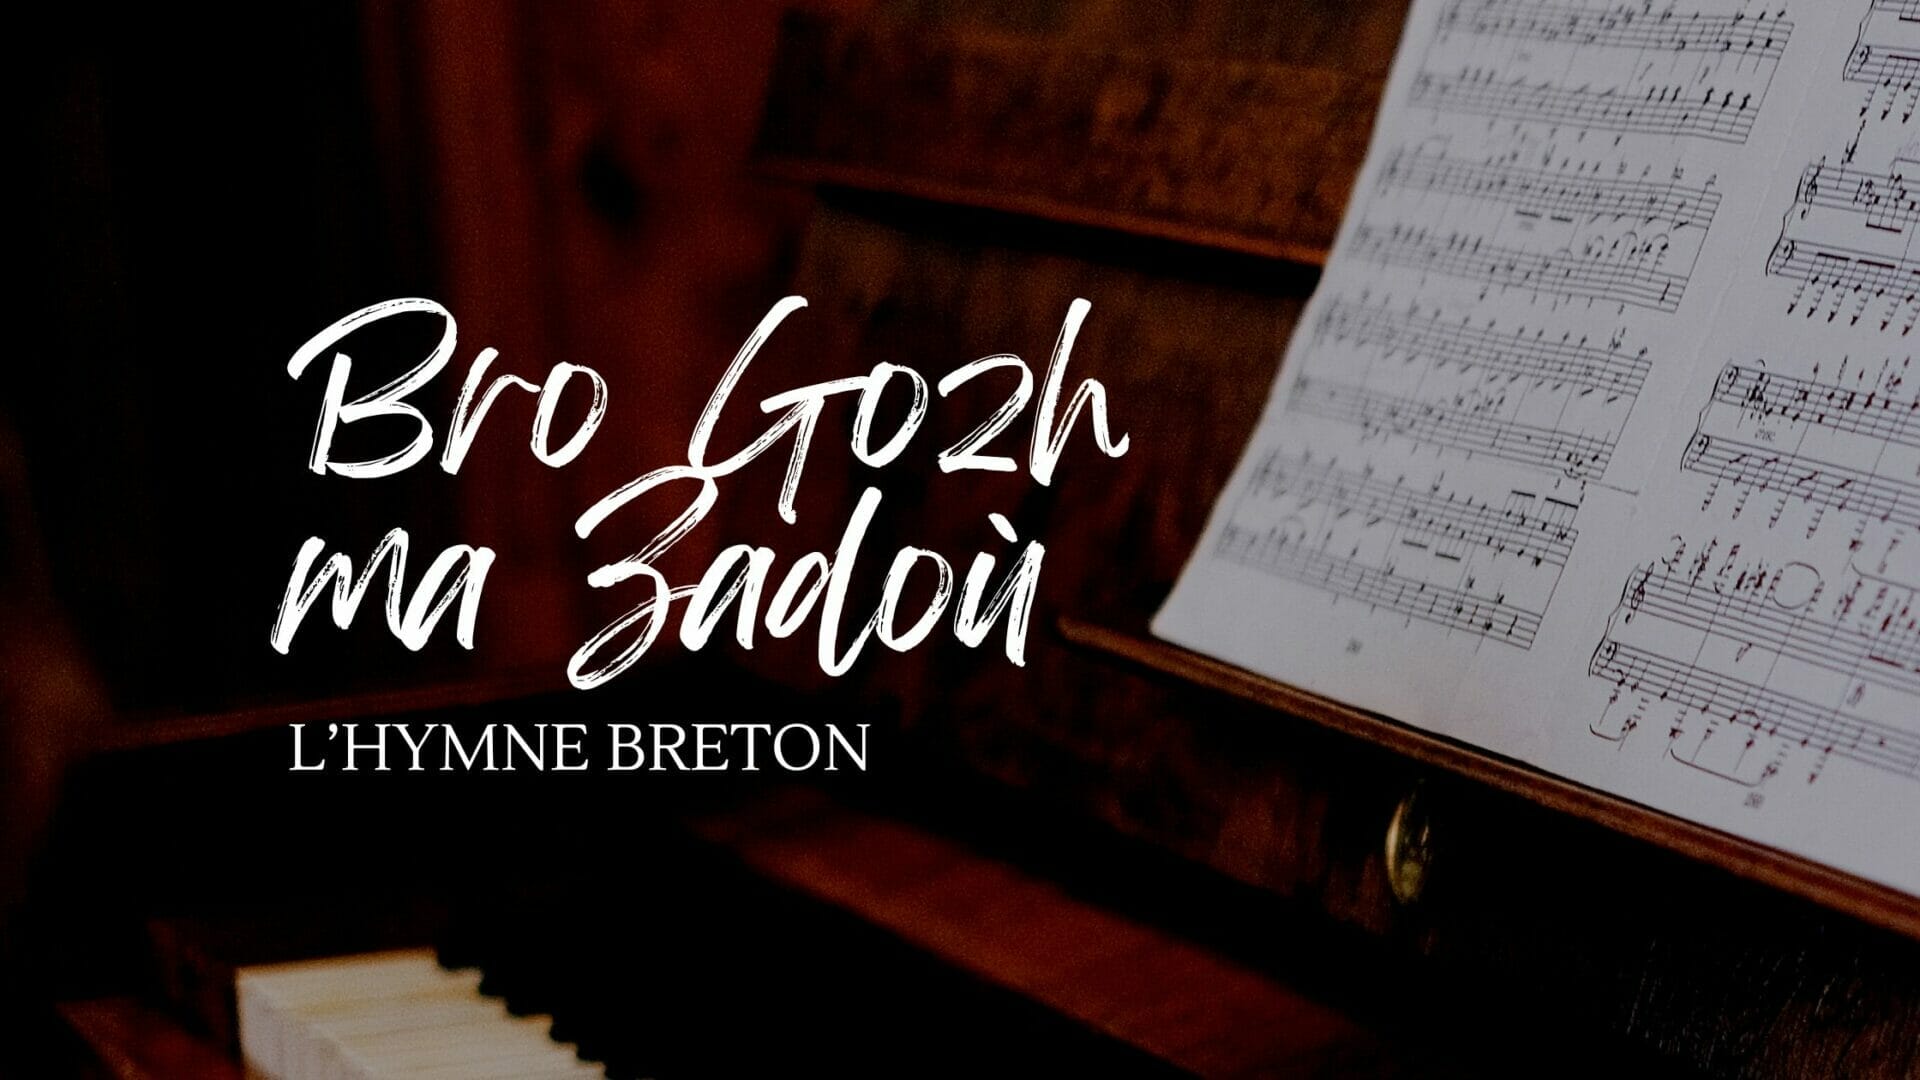 Le Bro Gozh ma Zadoù, l’hymne de la Bretagne